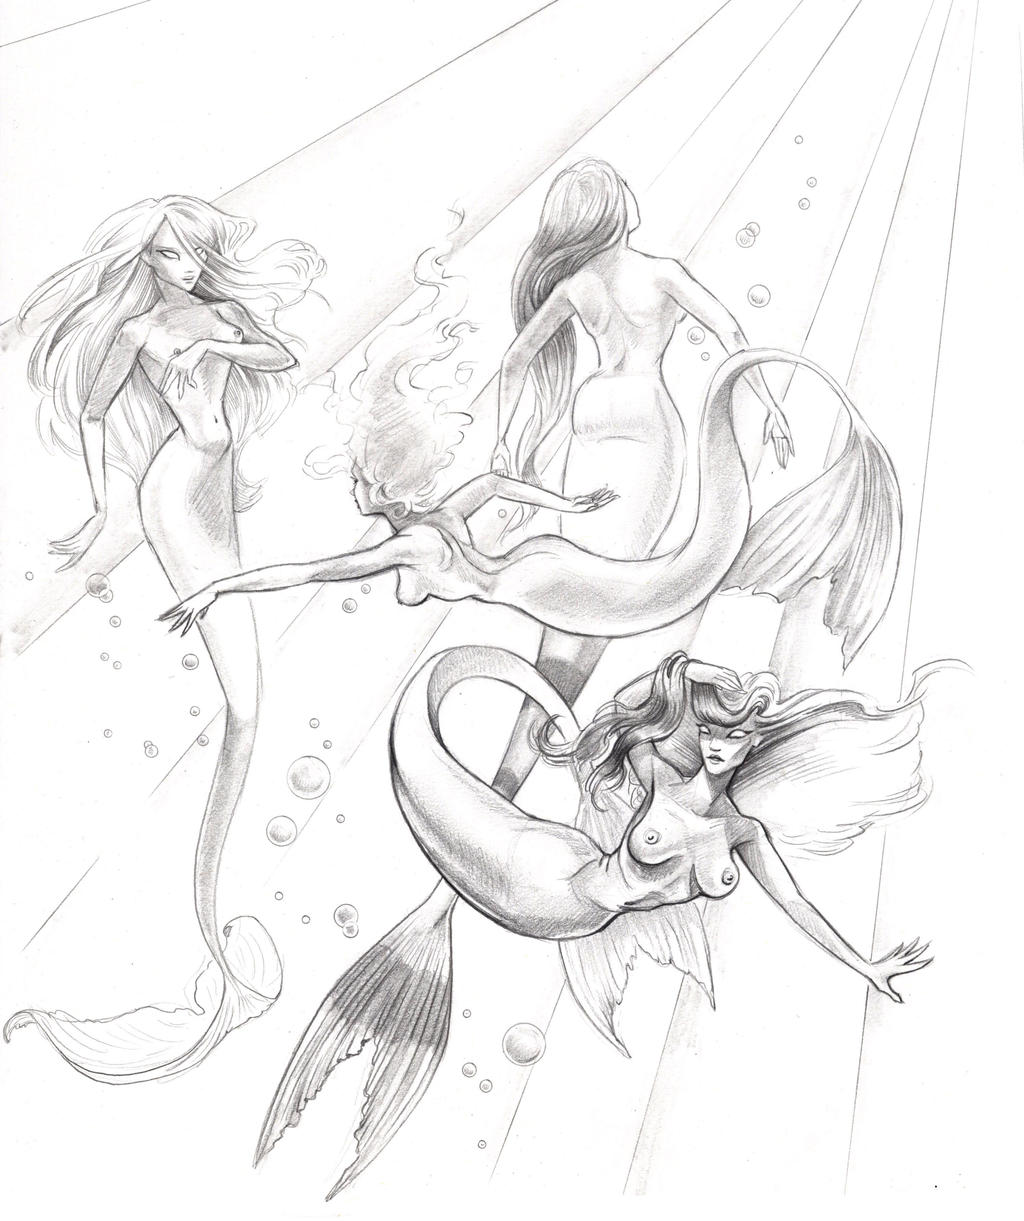 A Group of Mermaids